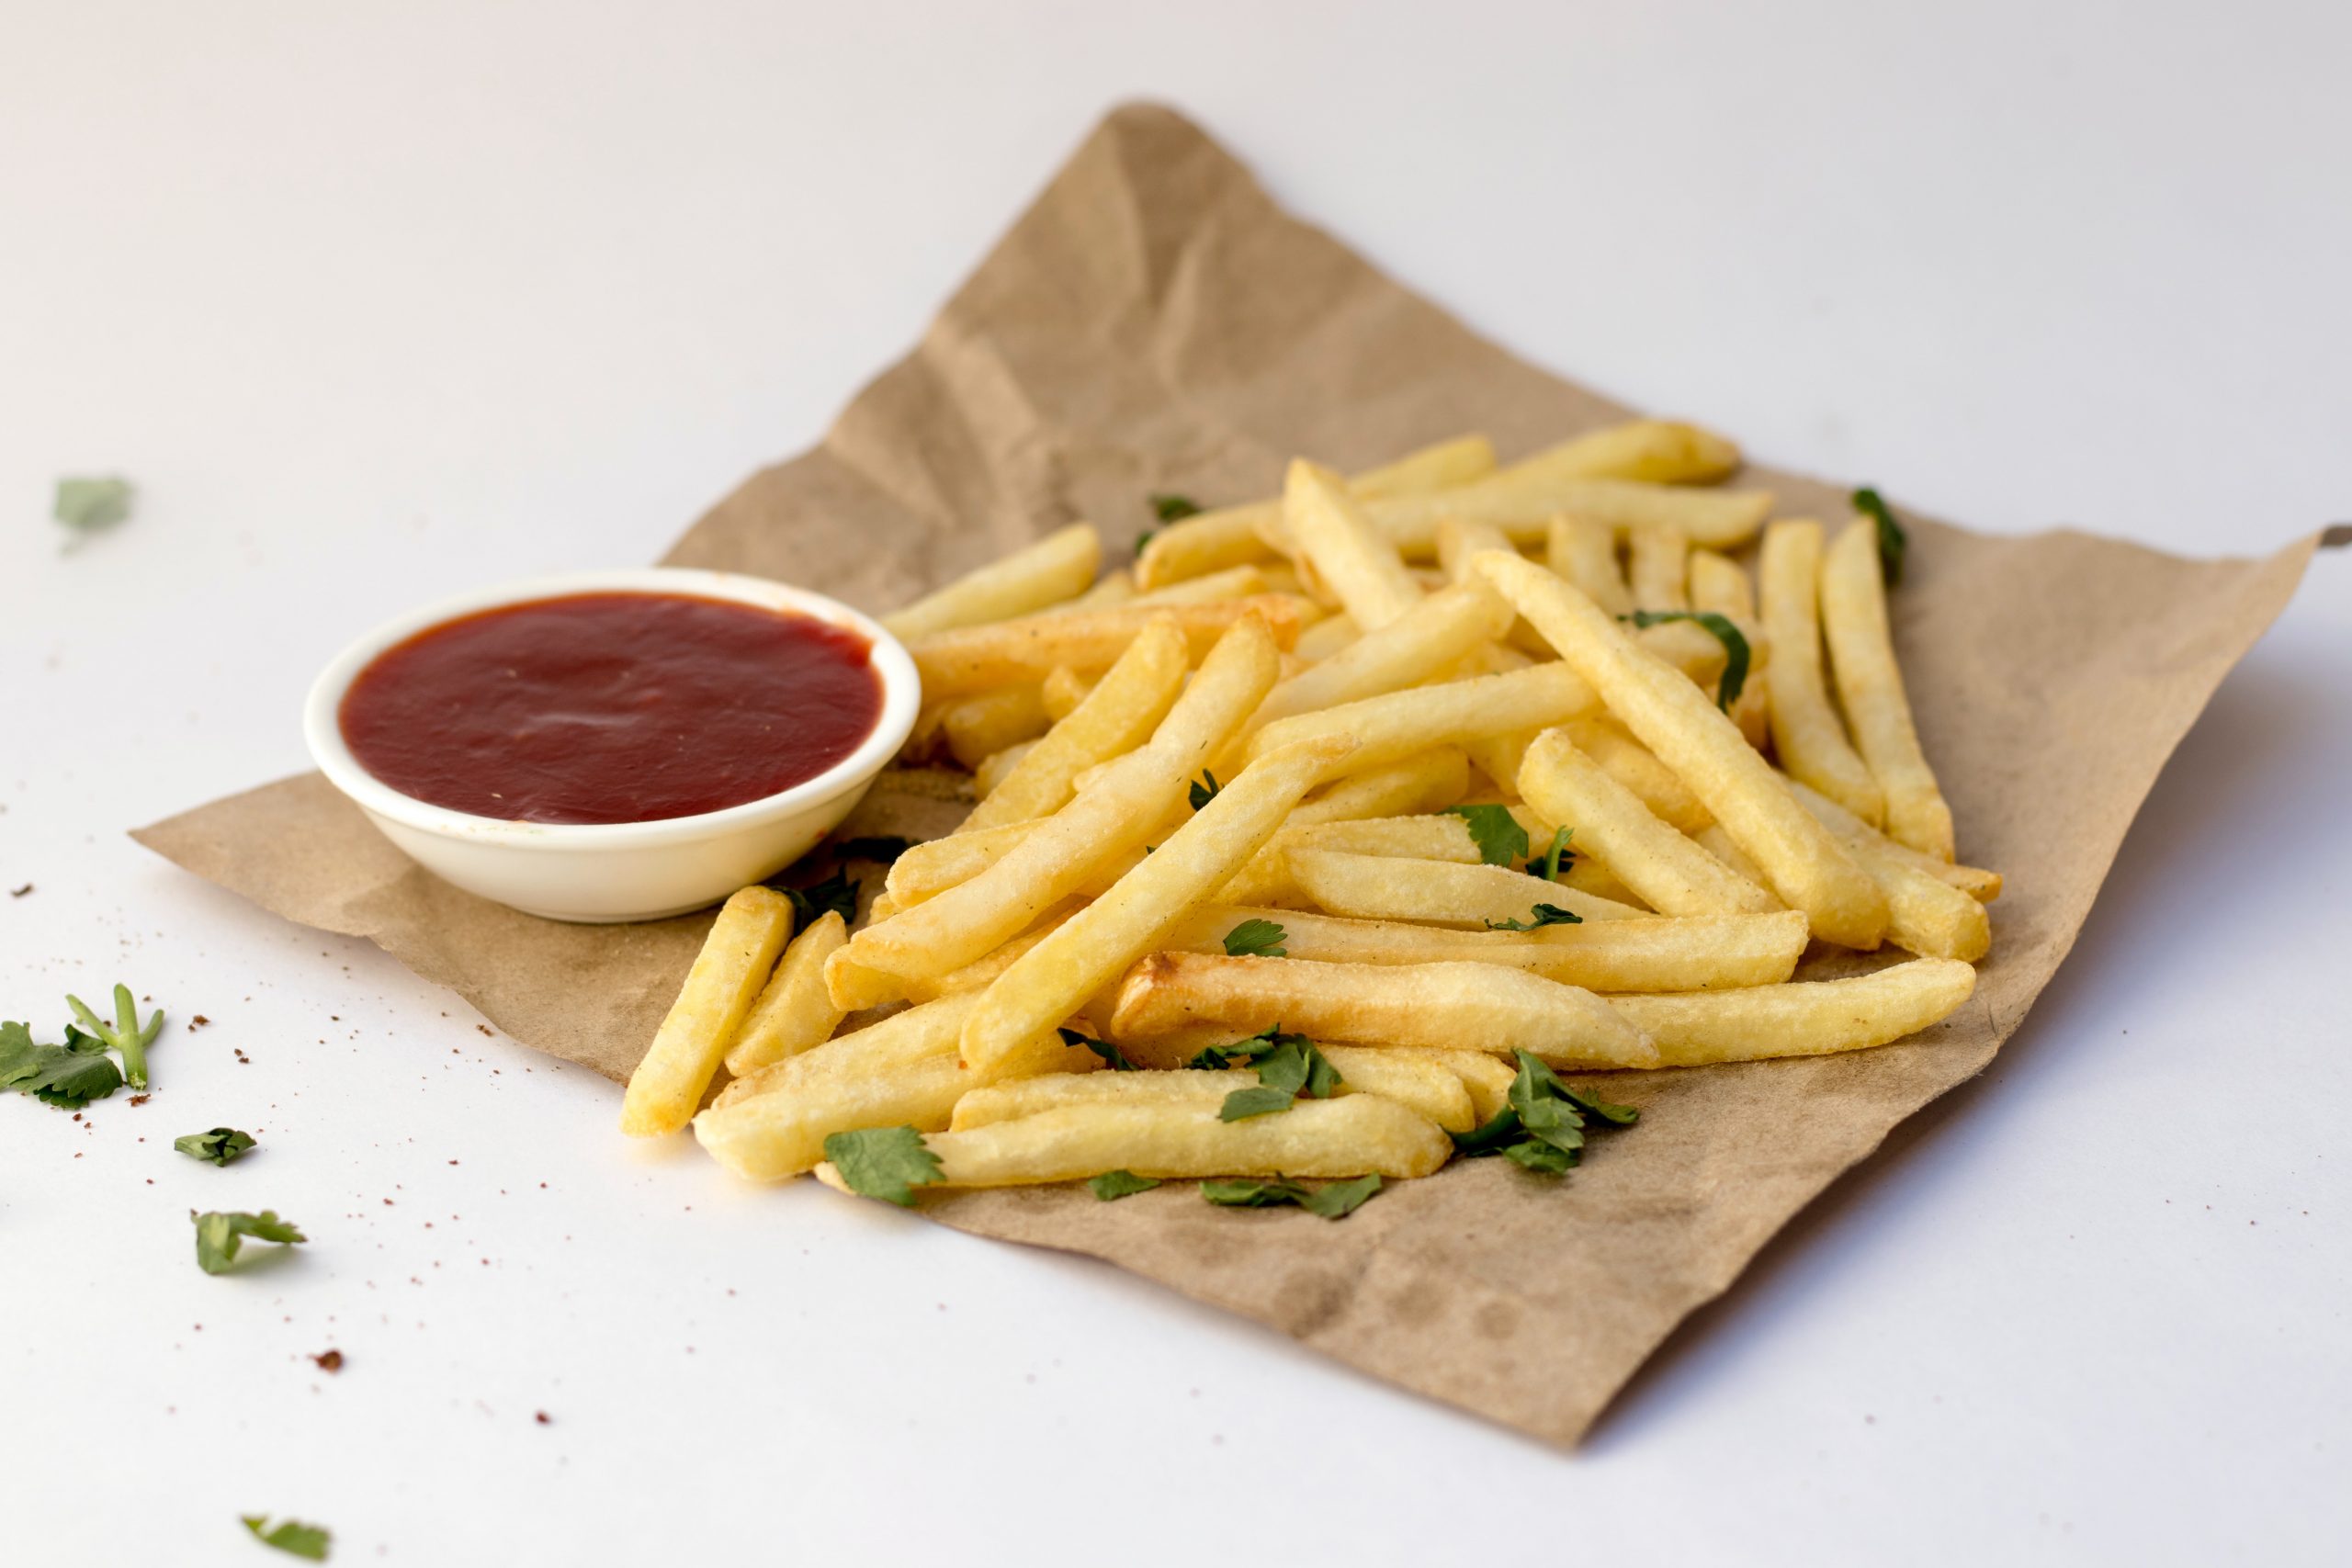 How to Reheat McDonald’s Fries